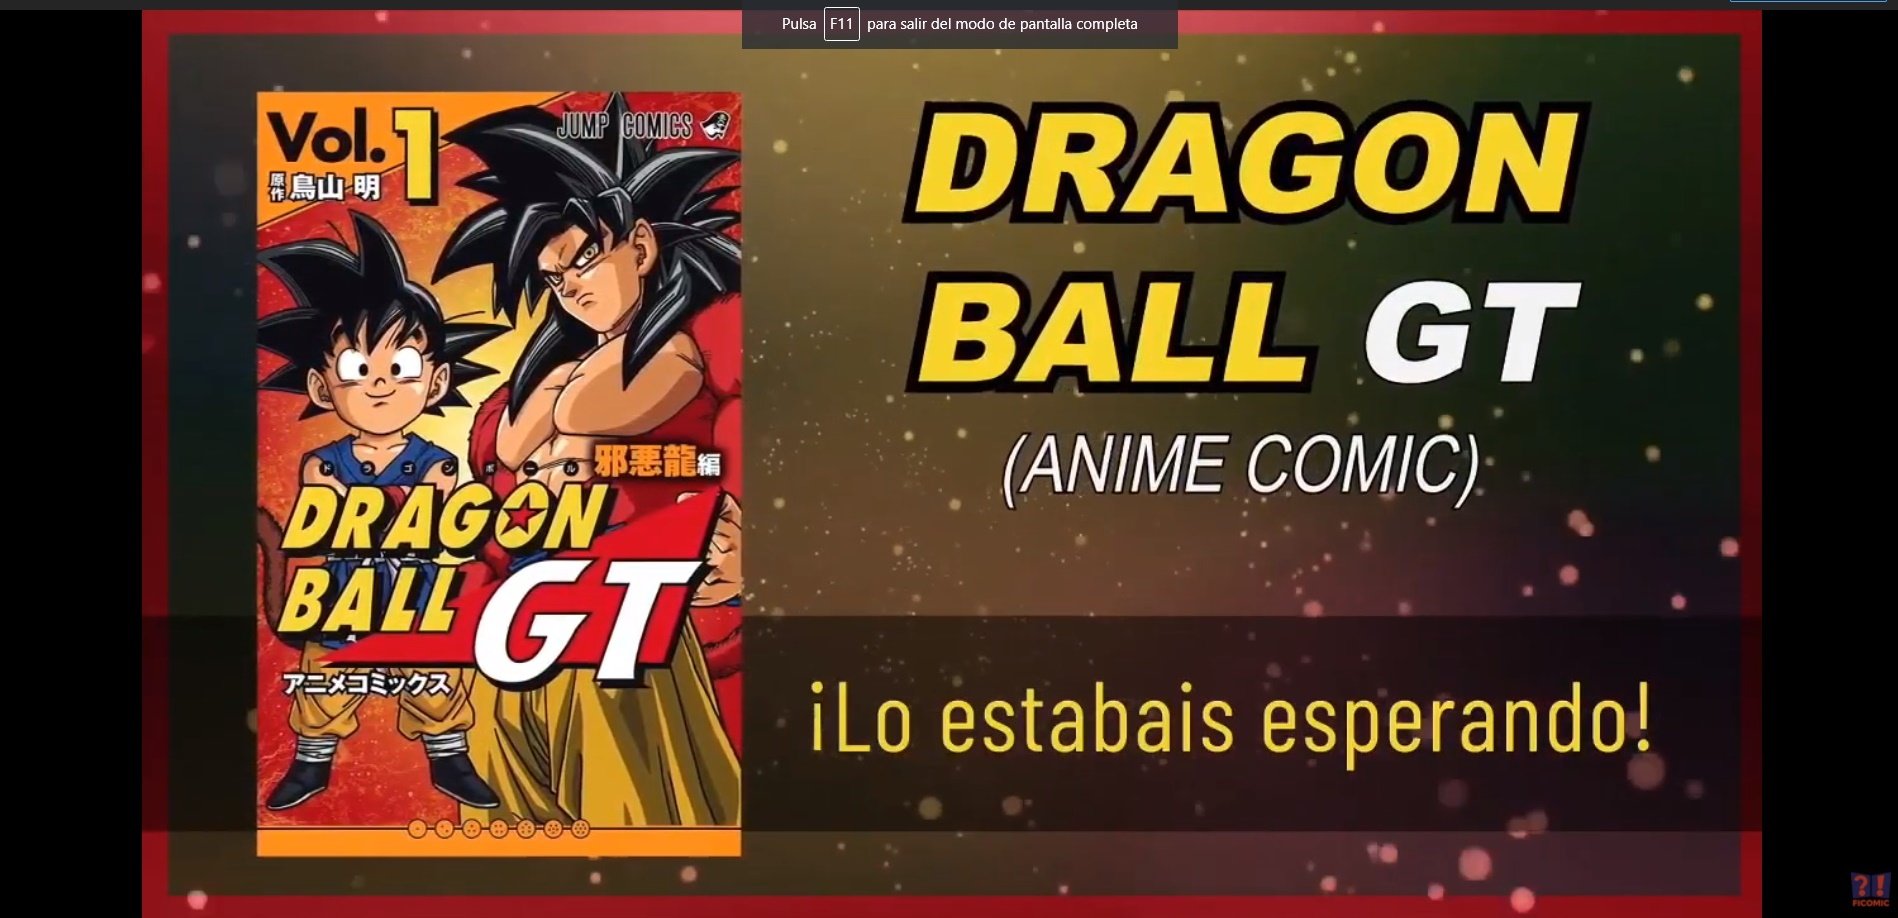 El Manga de Dragon Ball GT, una realidad gracias a Planeta Cómic